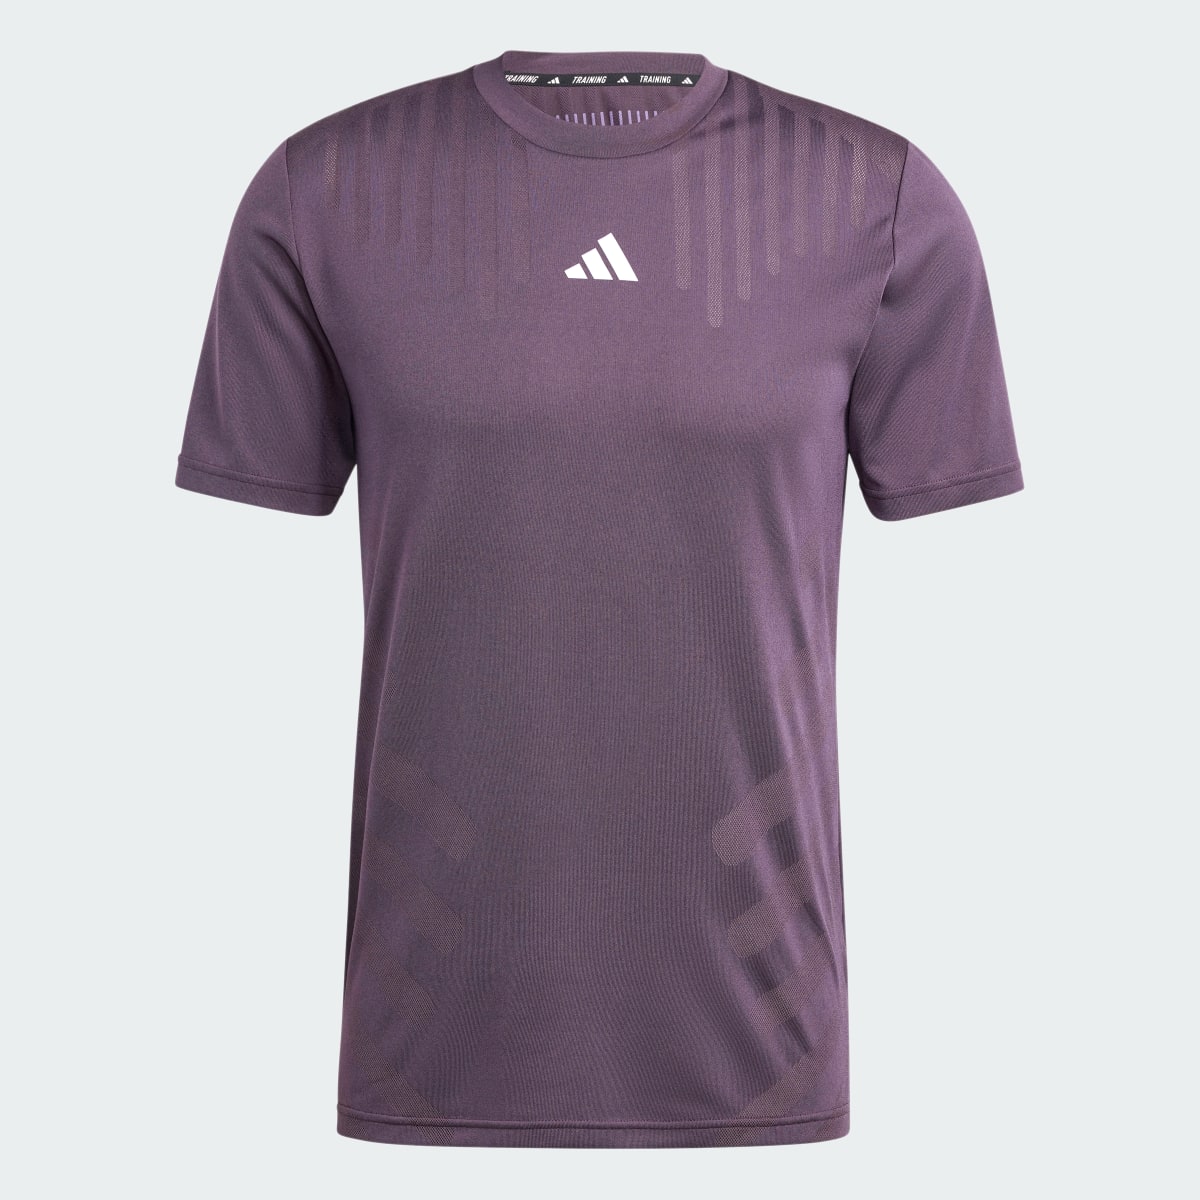 Adidas T-shirt HIIT Airchill Workout. 5